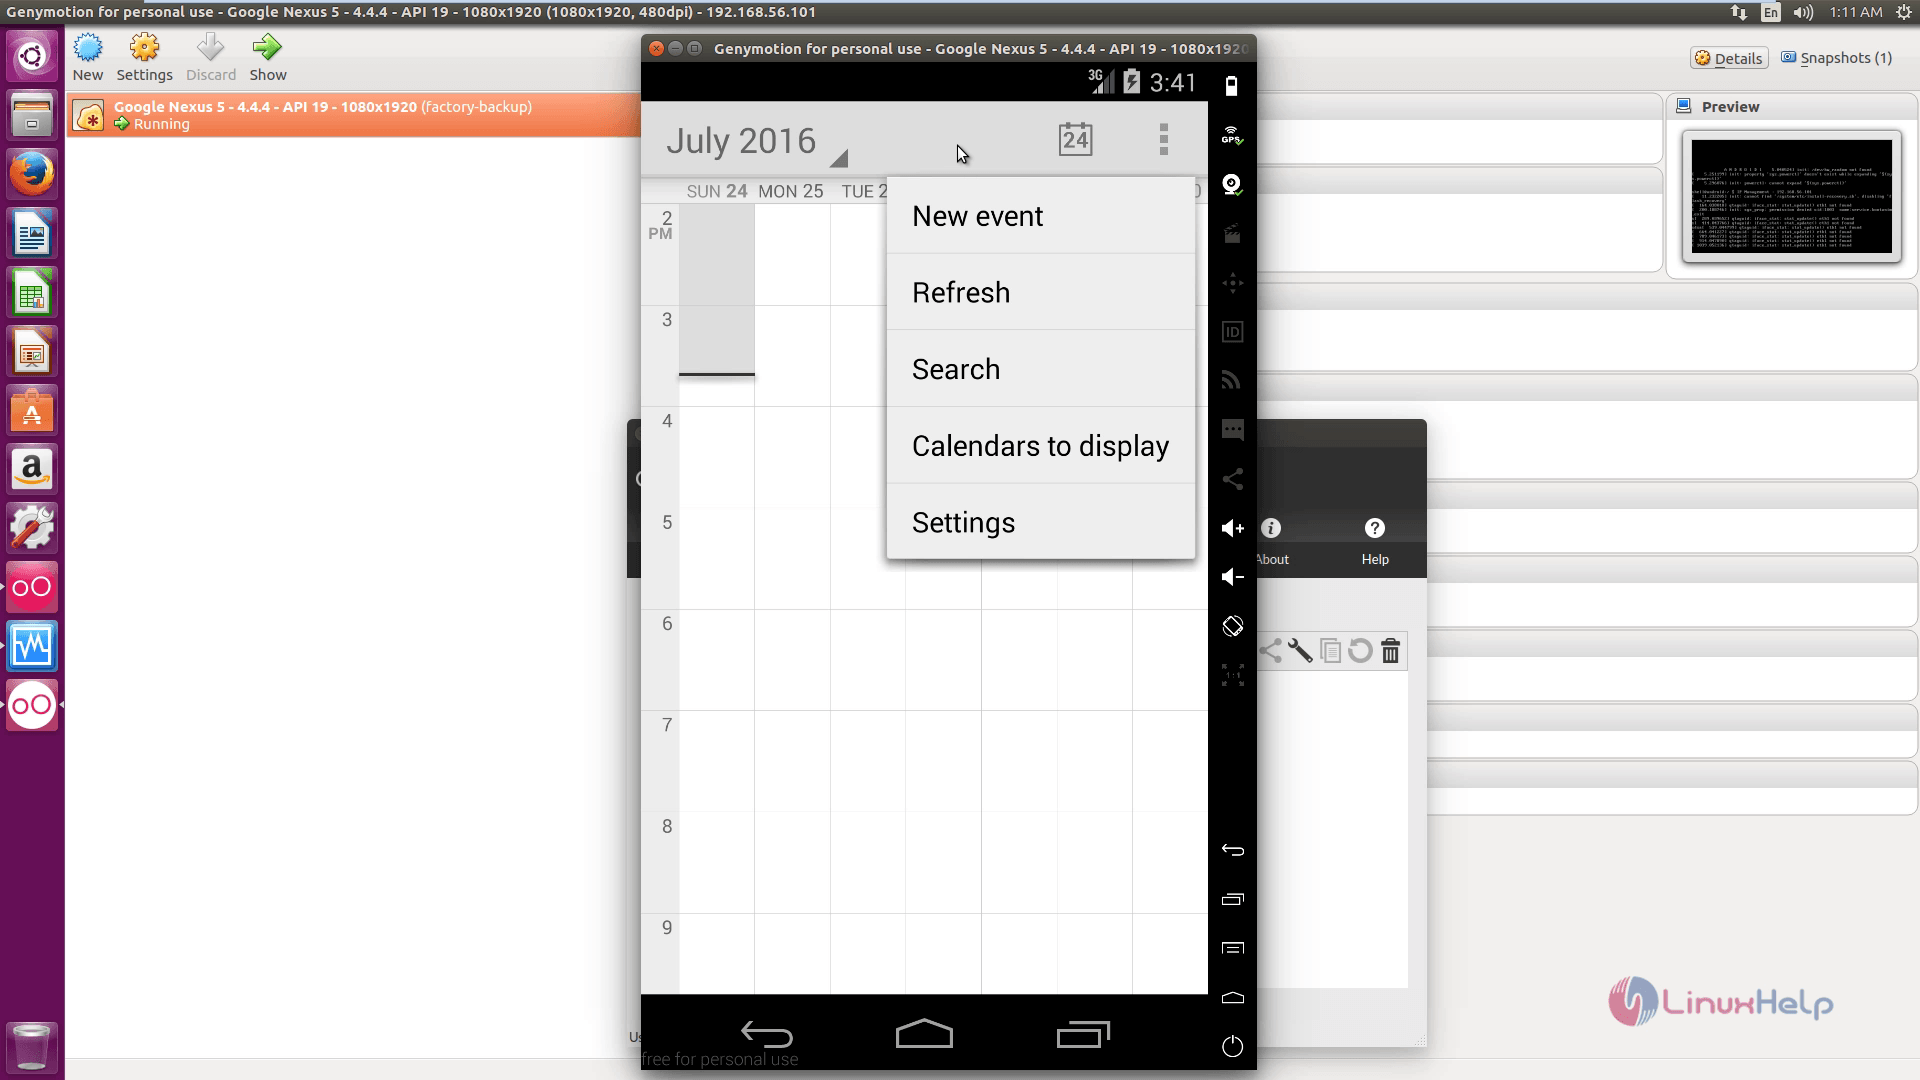 run-Android-Apps-Ubuntu-Genymotion-Emulator-testing-and-presentation-view-calendar